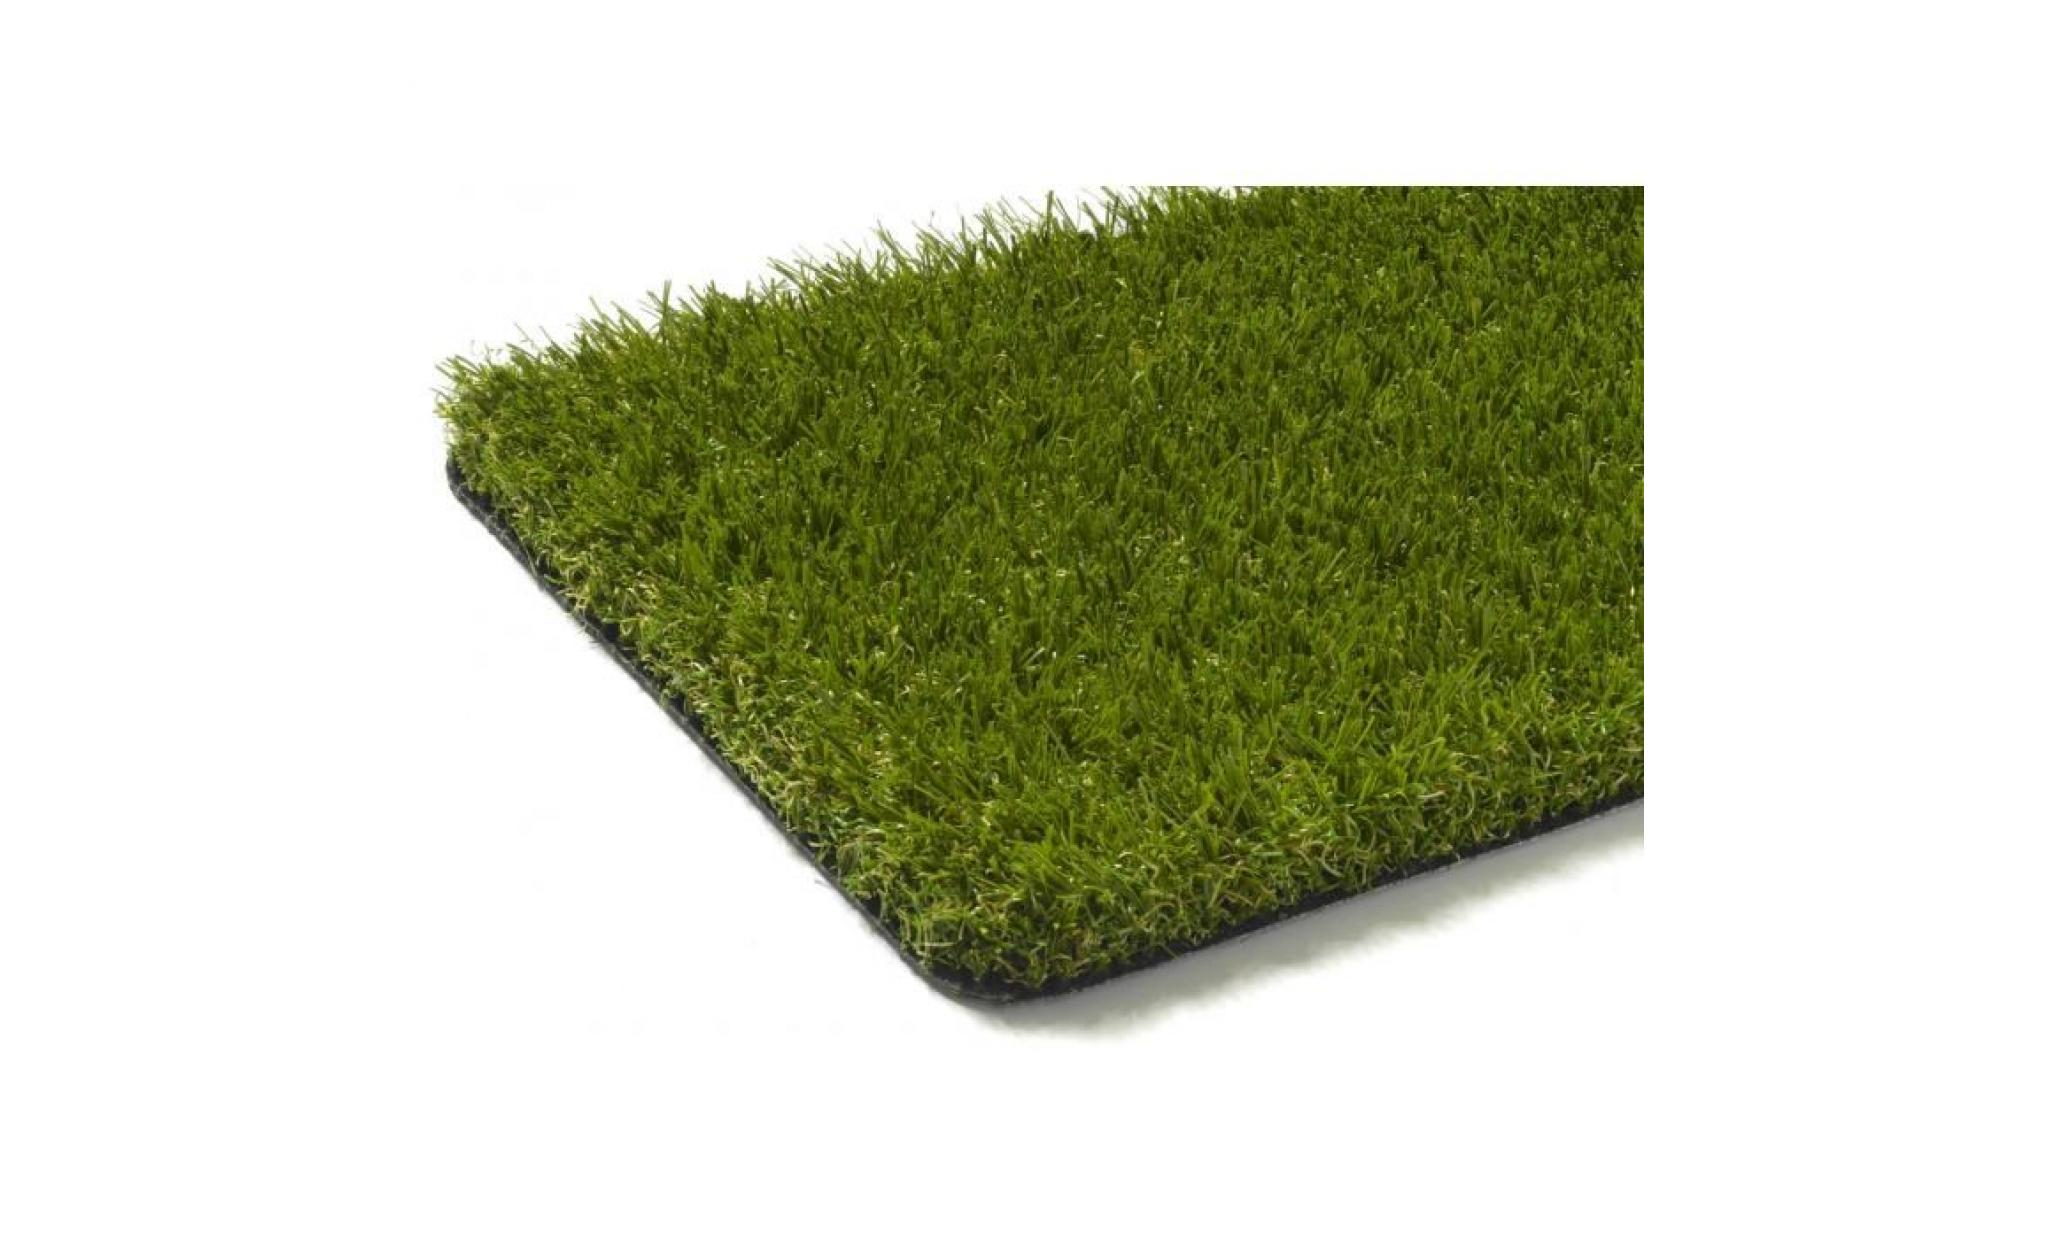 oxford   tapis type luxe gazon artificiel – pour jardin, terrasse, balcon   vert  [200x200 cm]